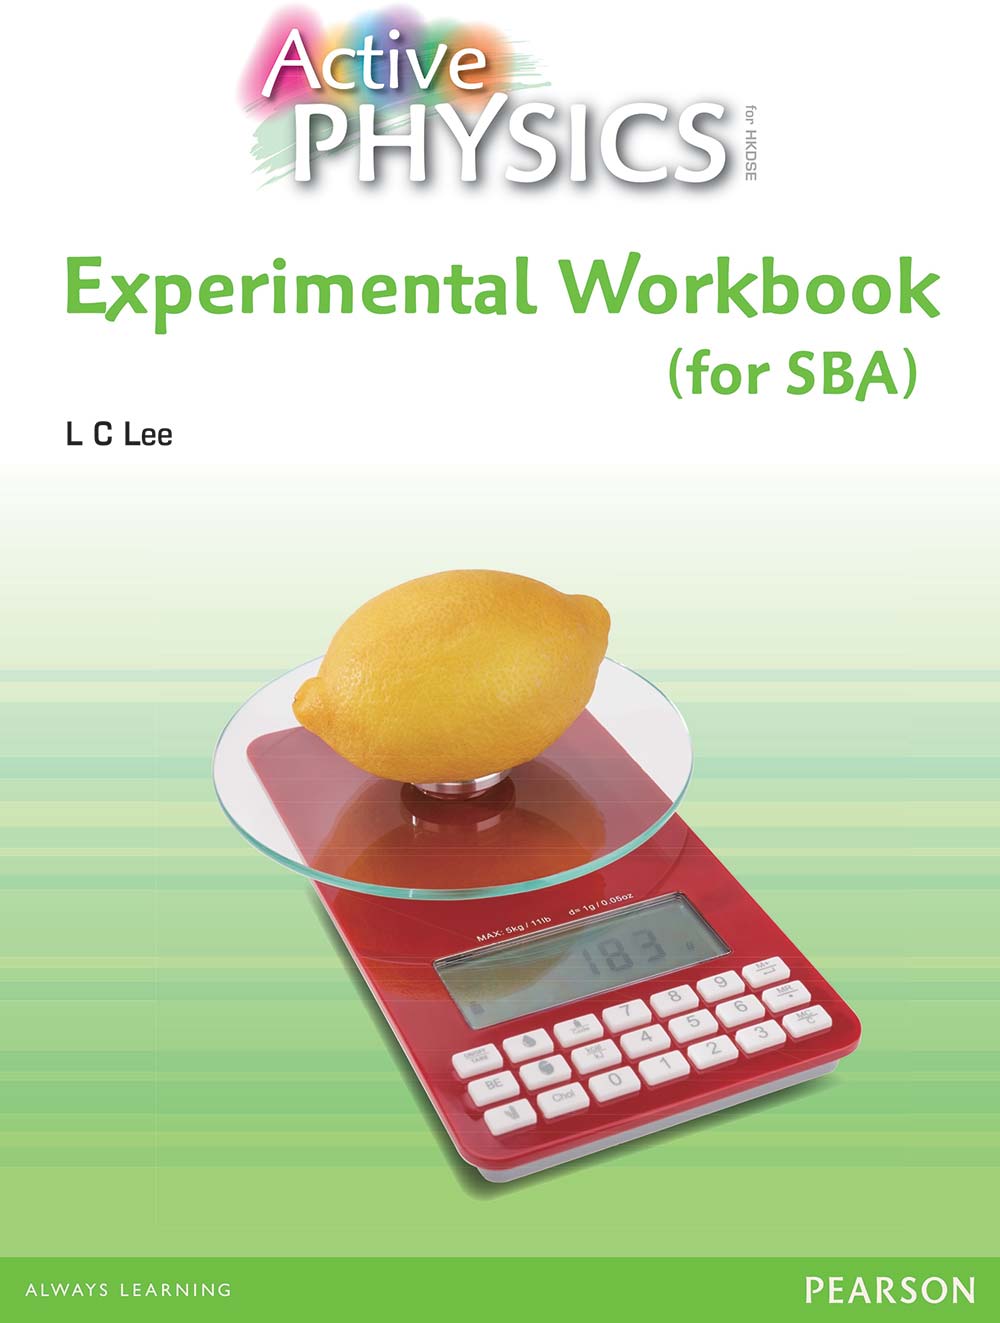 Active Physics Experimental Workbook (for SBA)